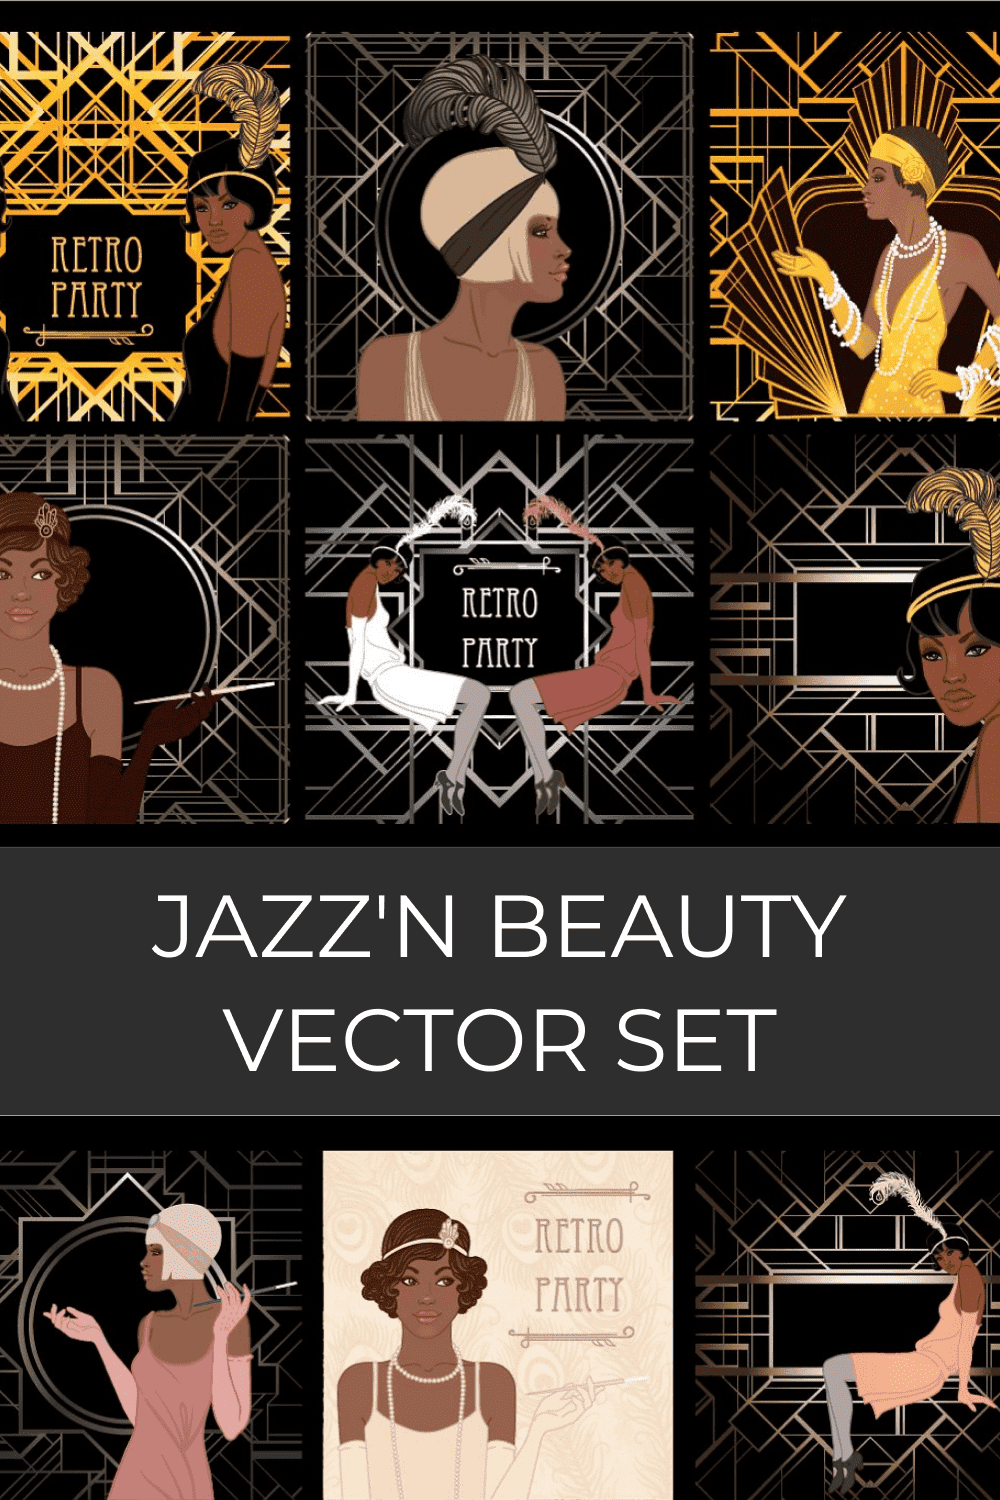 jazzn beauty vector set pinterest image.